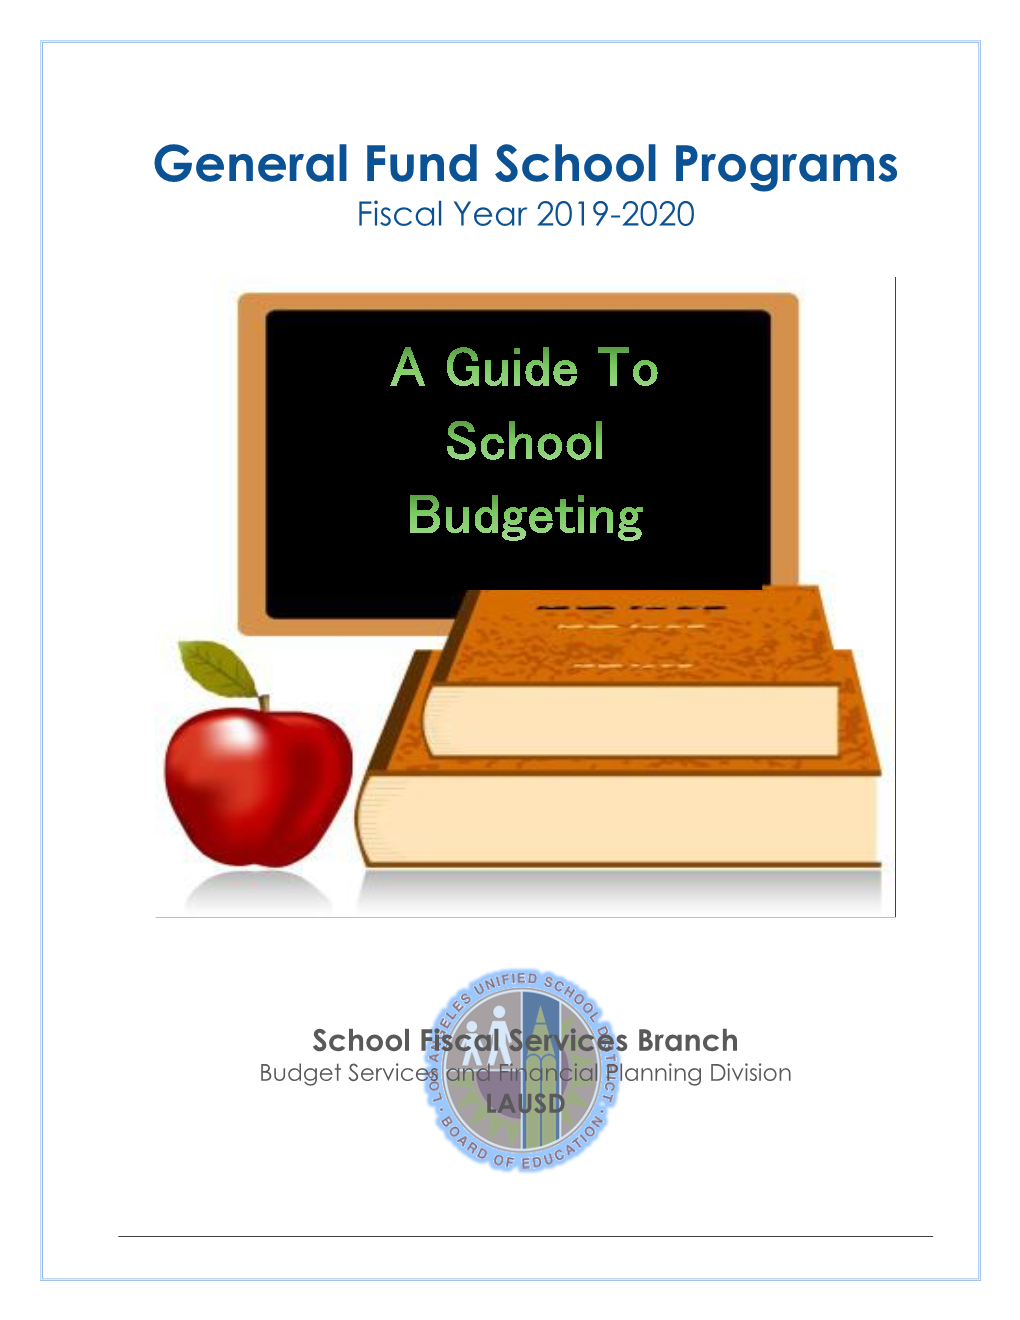 General Fund School Programs Fiscal Year 2019-2020